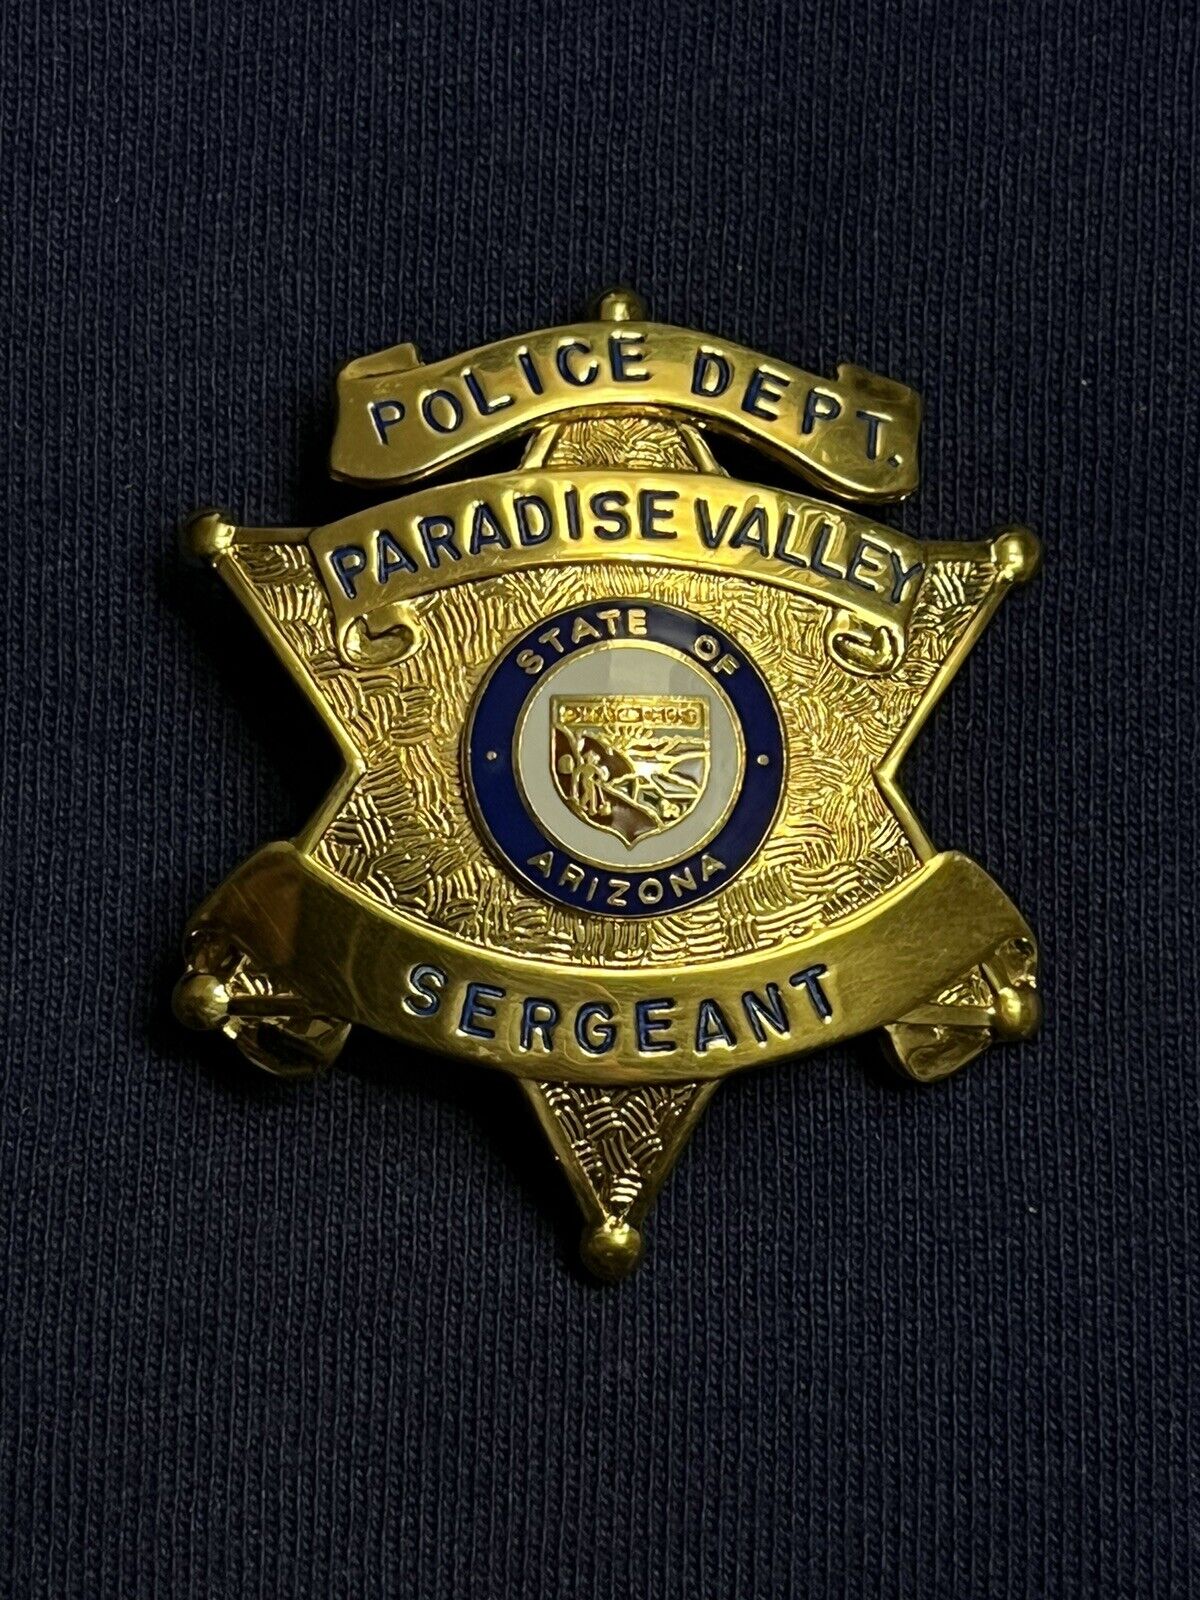 Obsolete Paradise Valley Police Department Sergeant Badge AZ Arizona Vintage